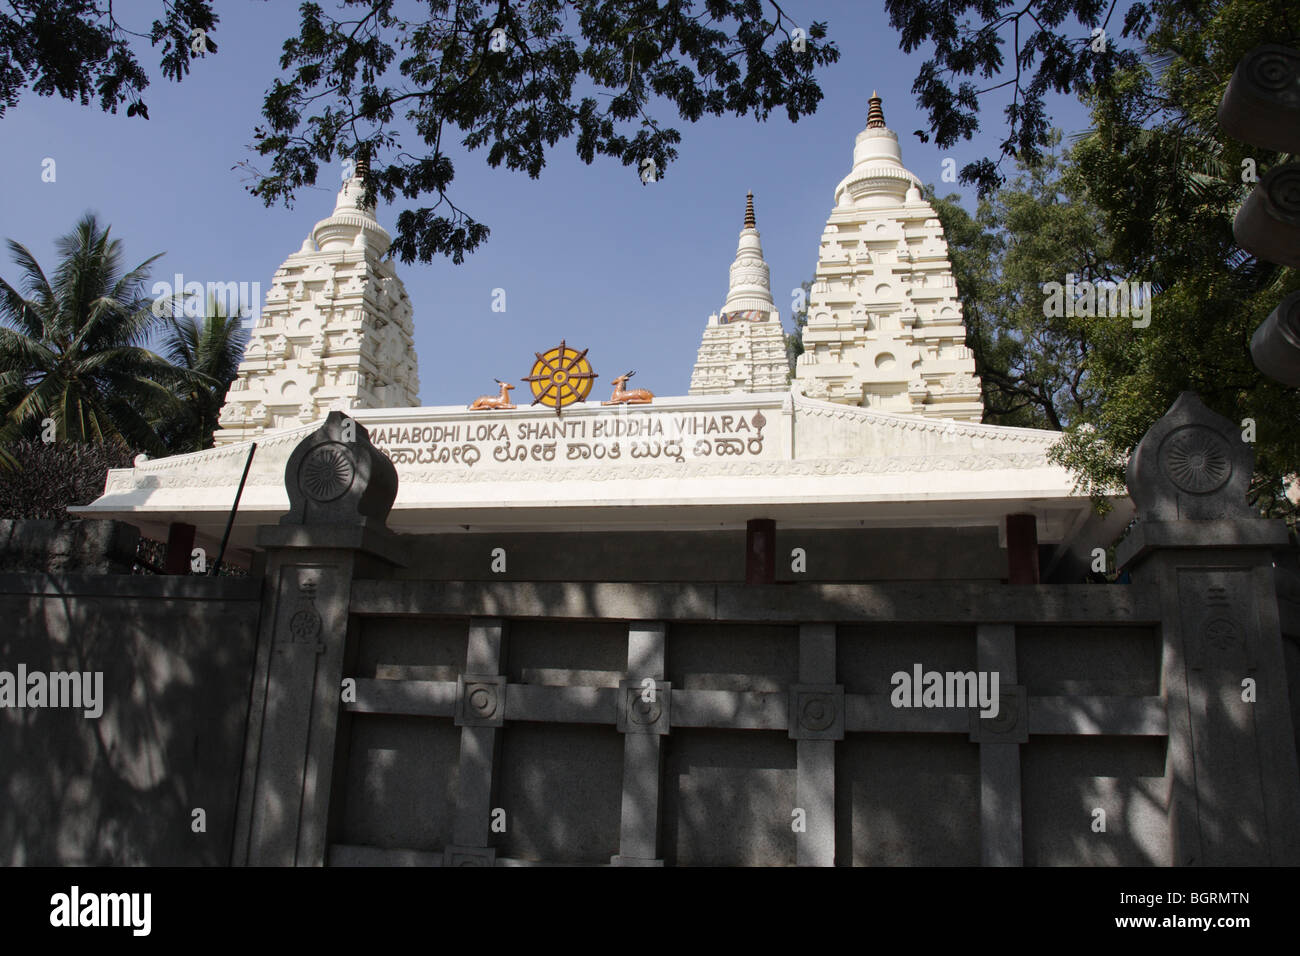 Maha Bodhi Loka Shanta Budha Vihara, Bangalore Stock Photo